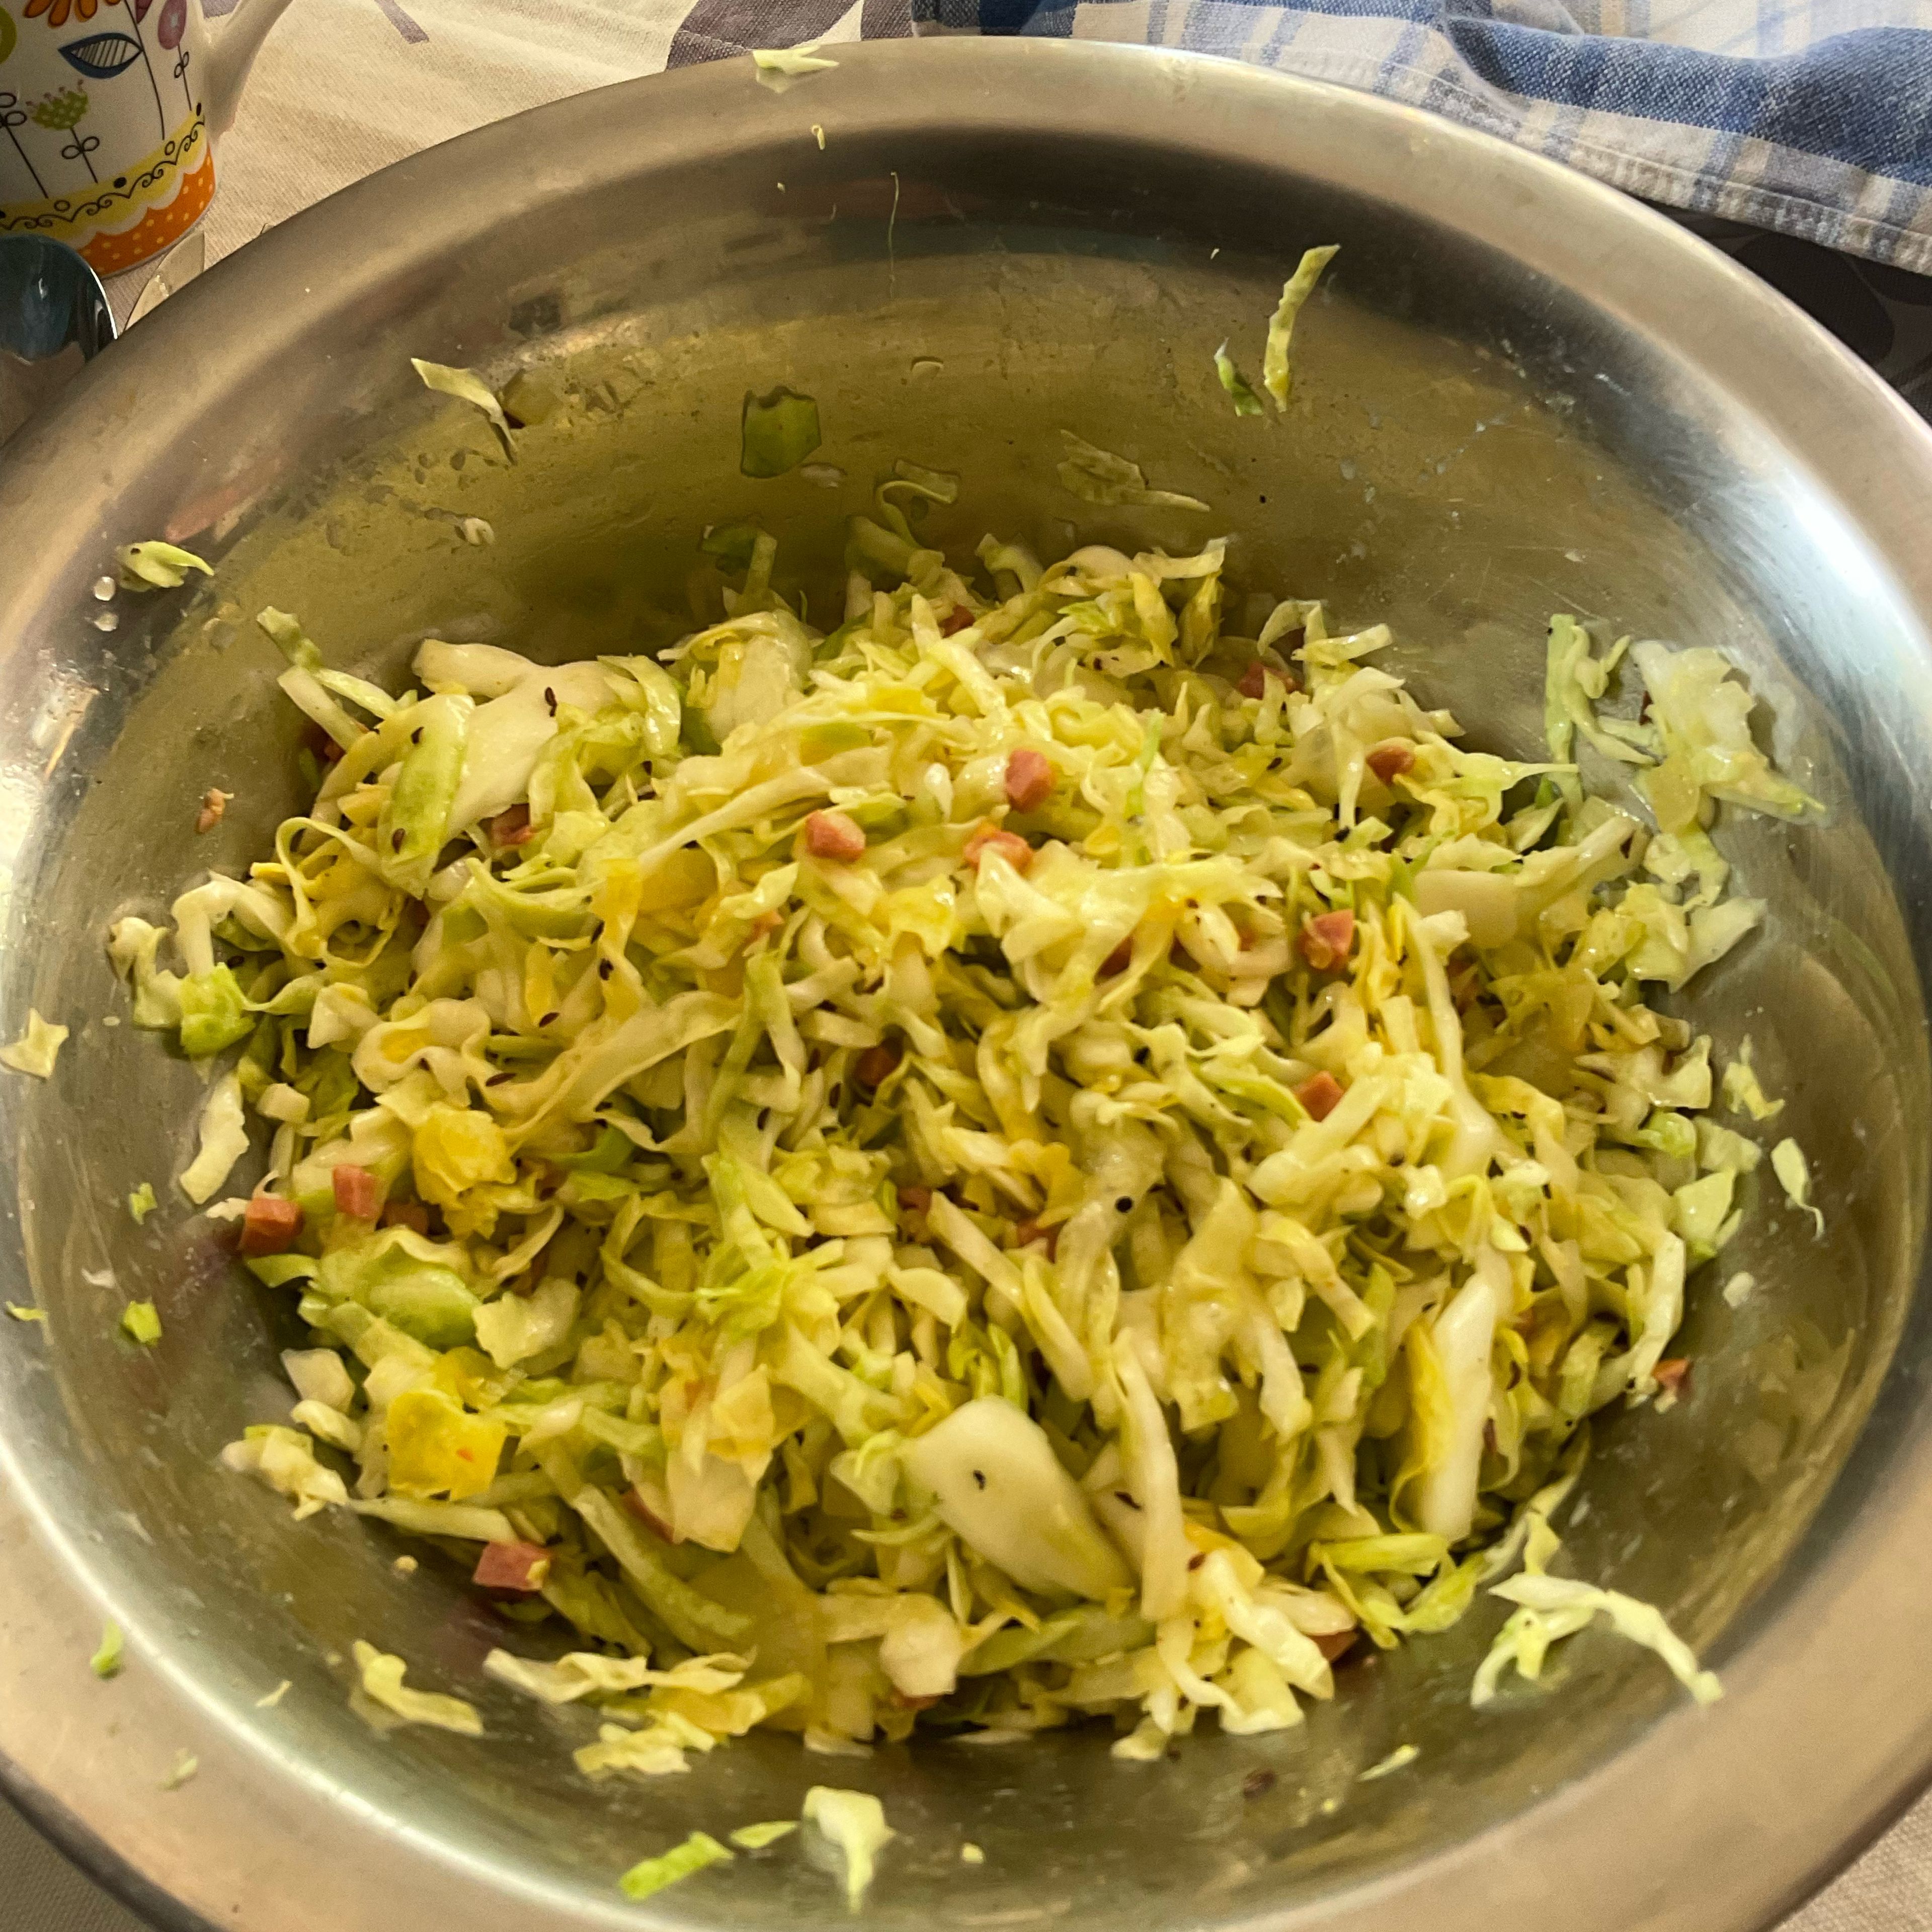 Hier der fertige leckere bayerische Krautsalat.